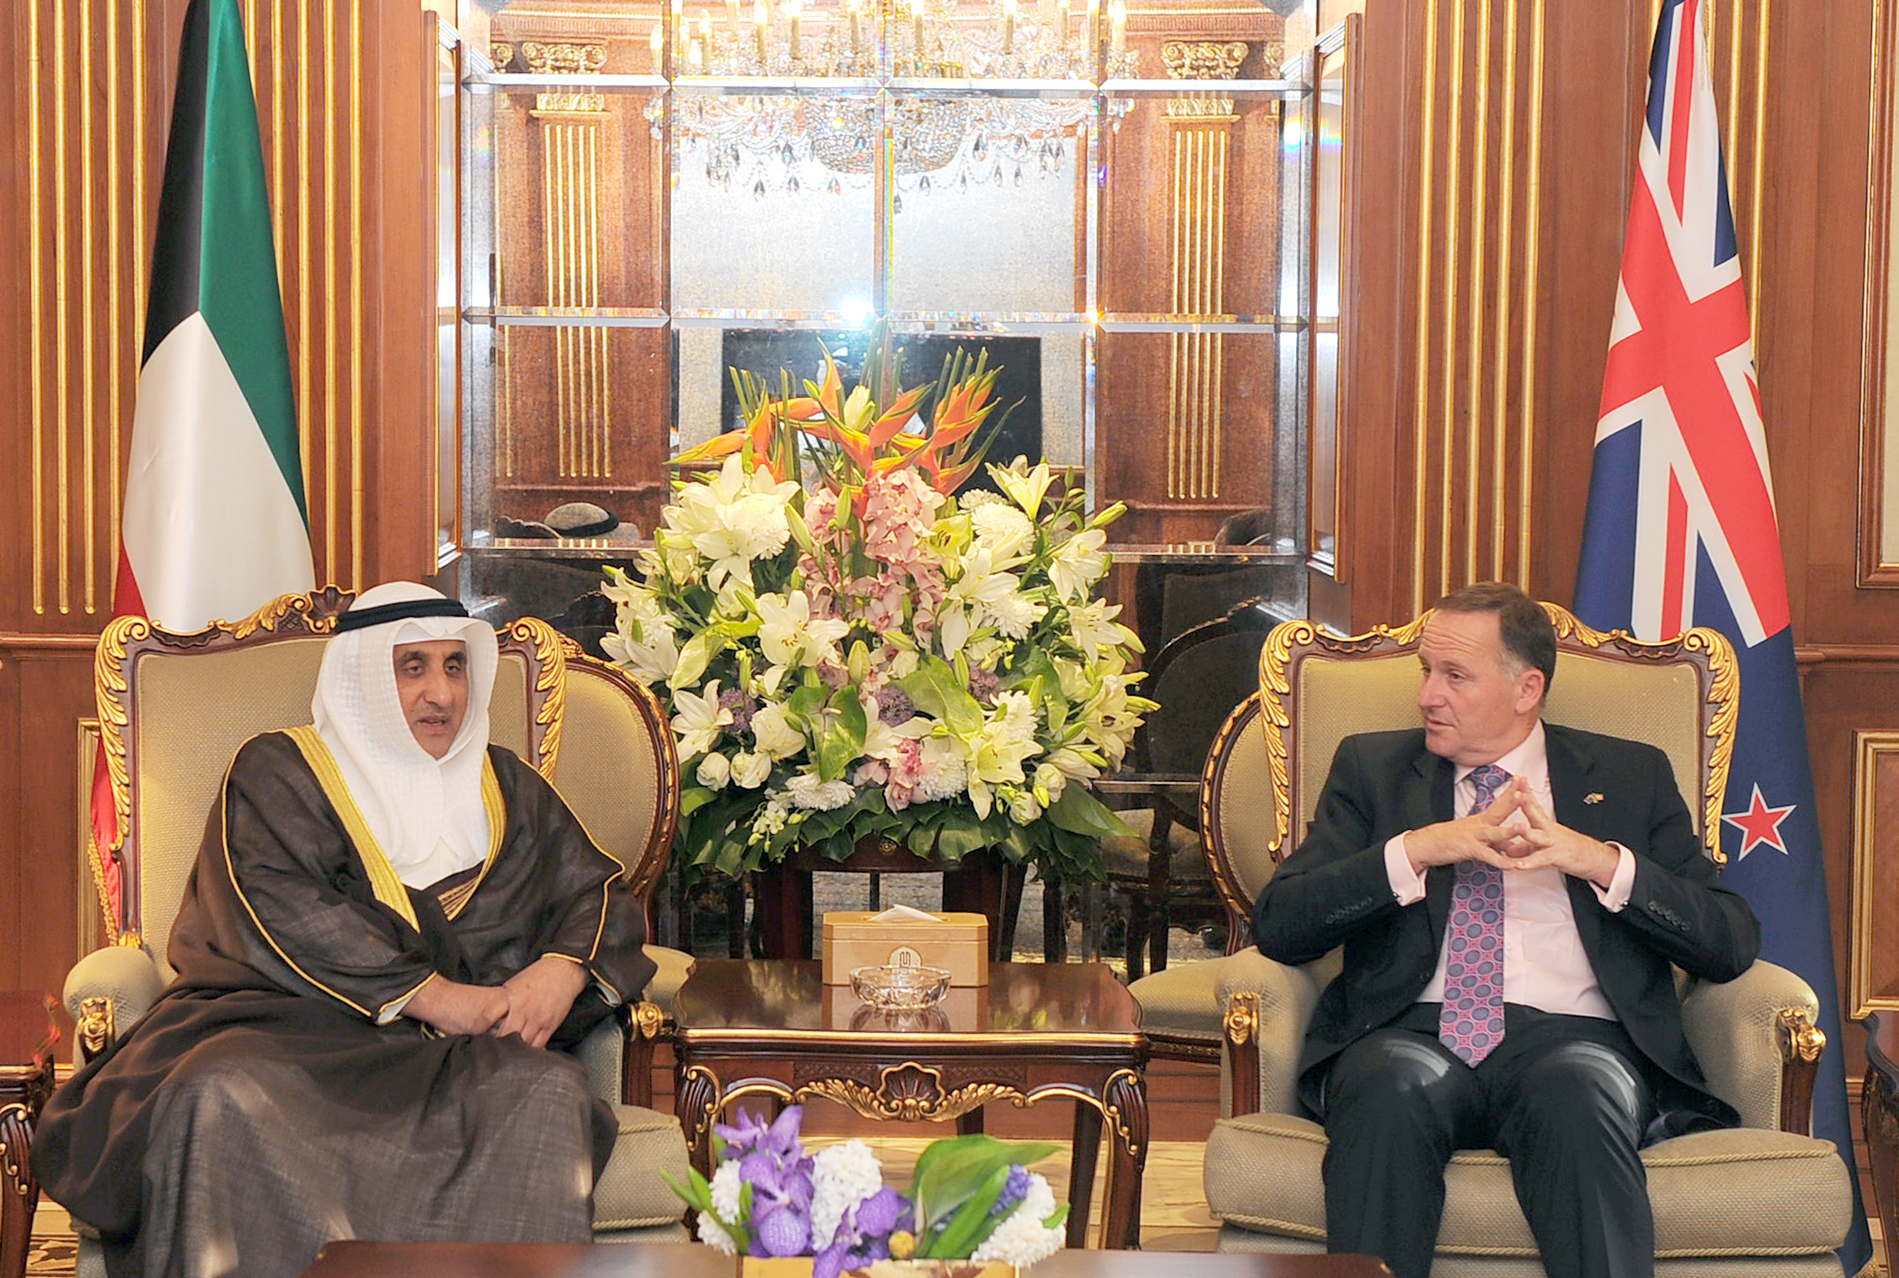 Prime Minister of New Zealand John Key meets Kuwait Fund for Arab Economic Development (KFAED) Director-General Abdulwhab Al-Bader